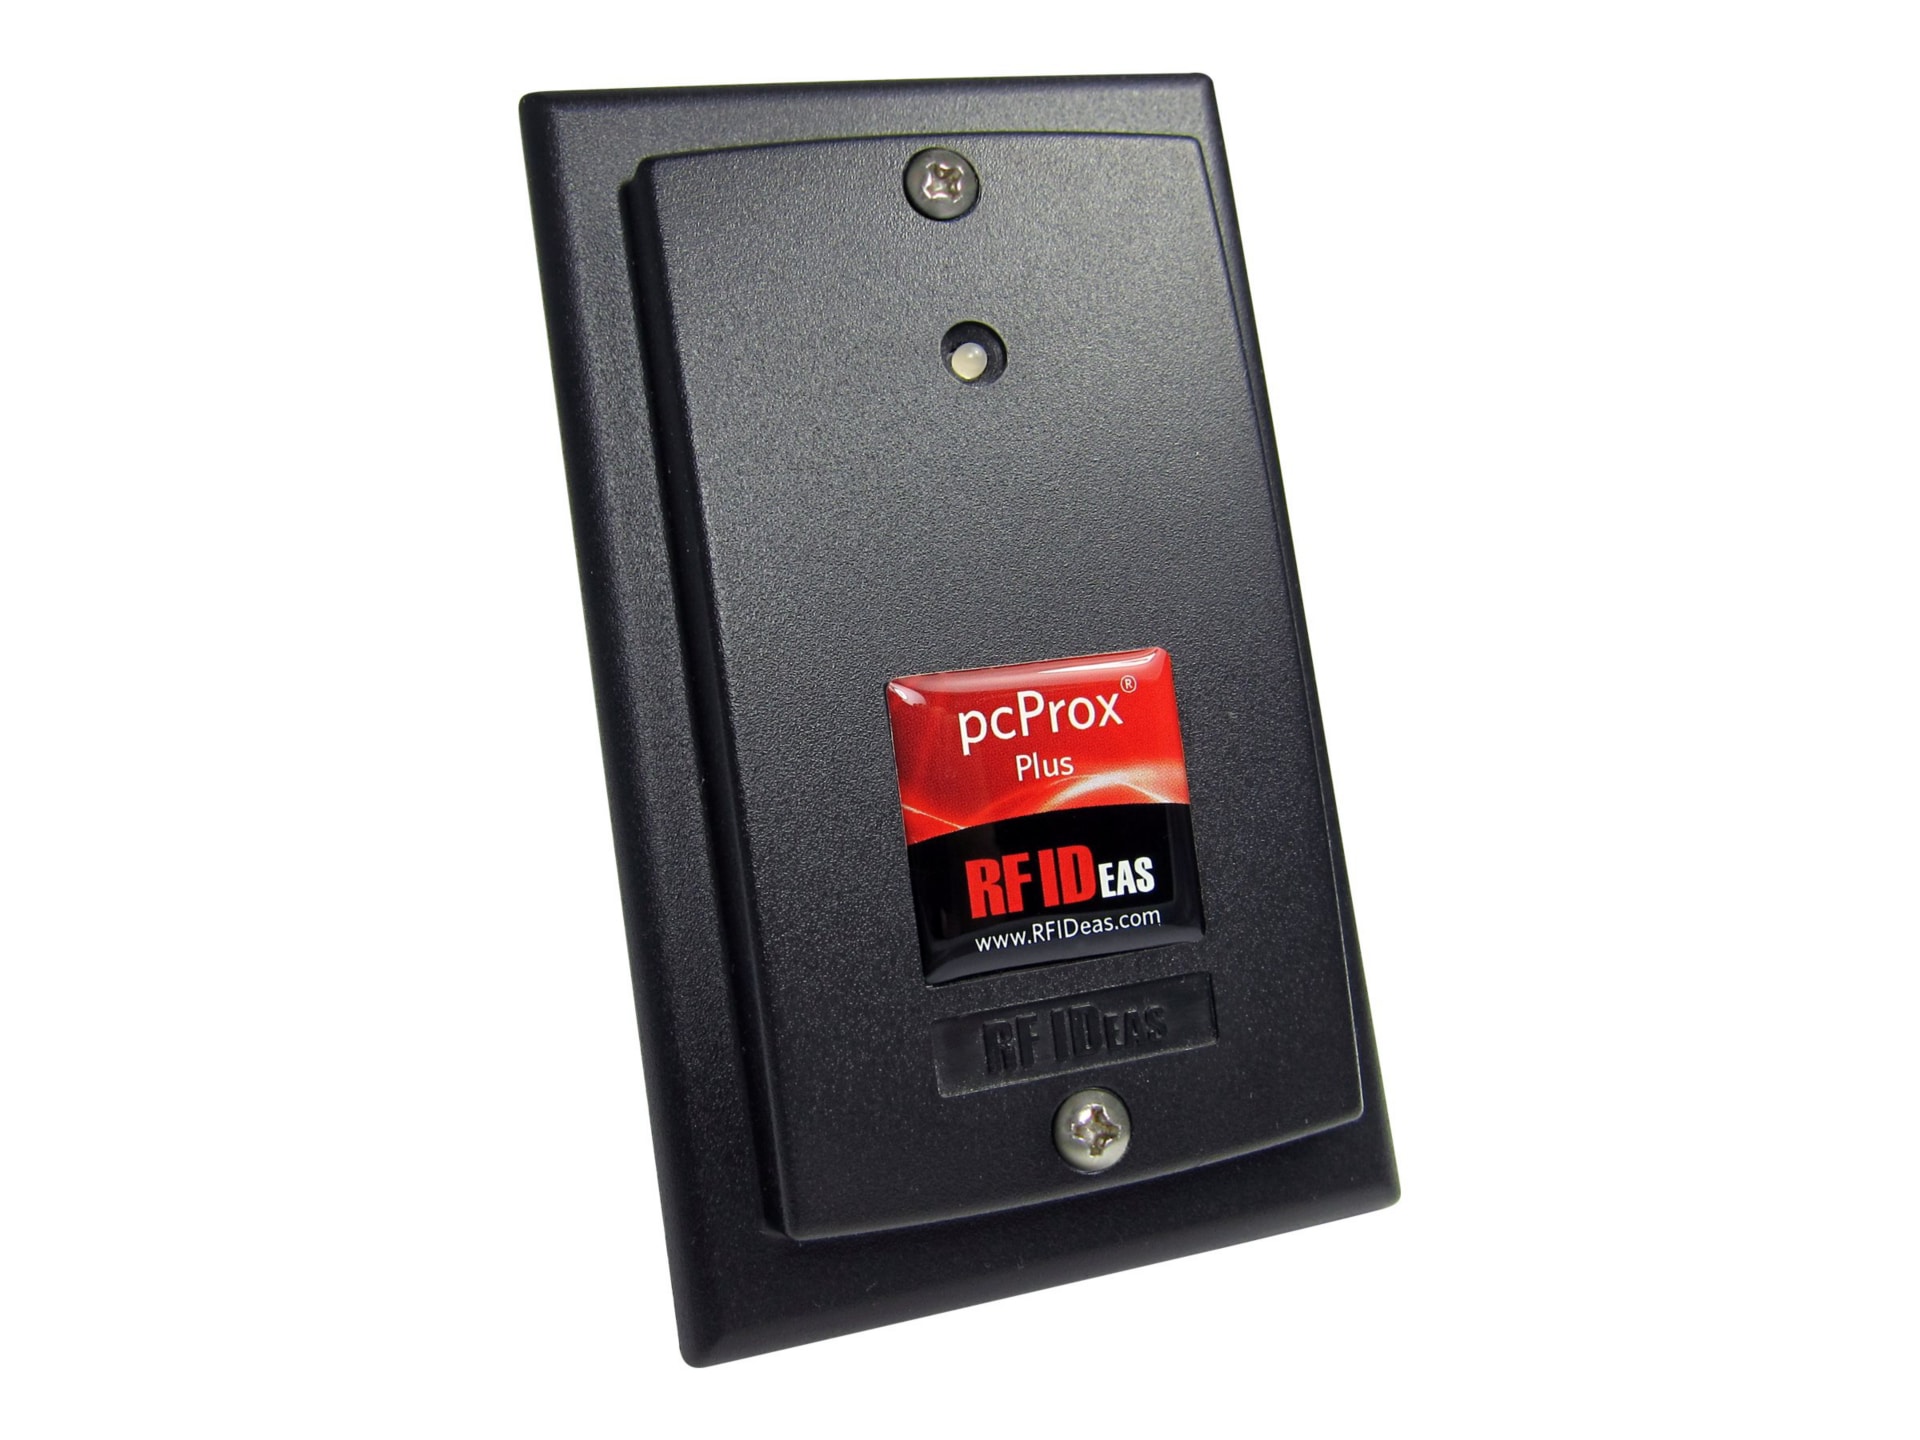 RF IDeas WAVE ID Plus Keystroke V2 Black Surface Mount Reader - RF proximit